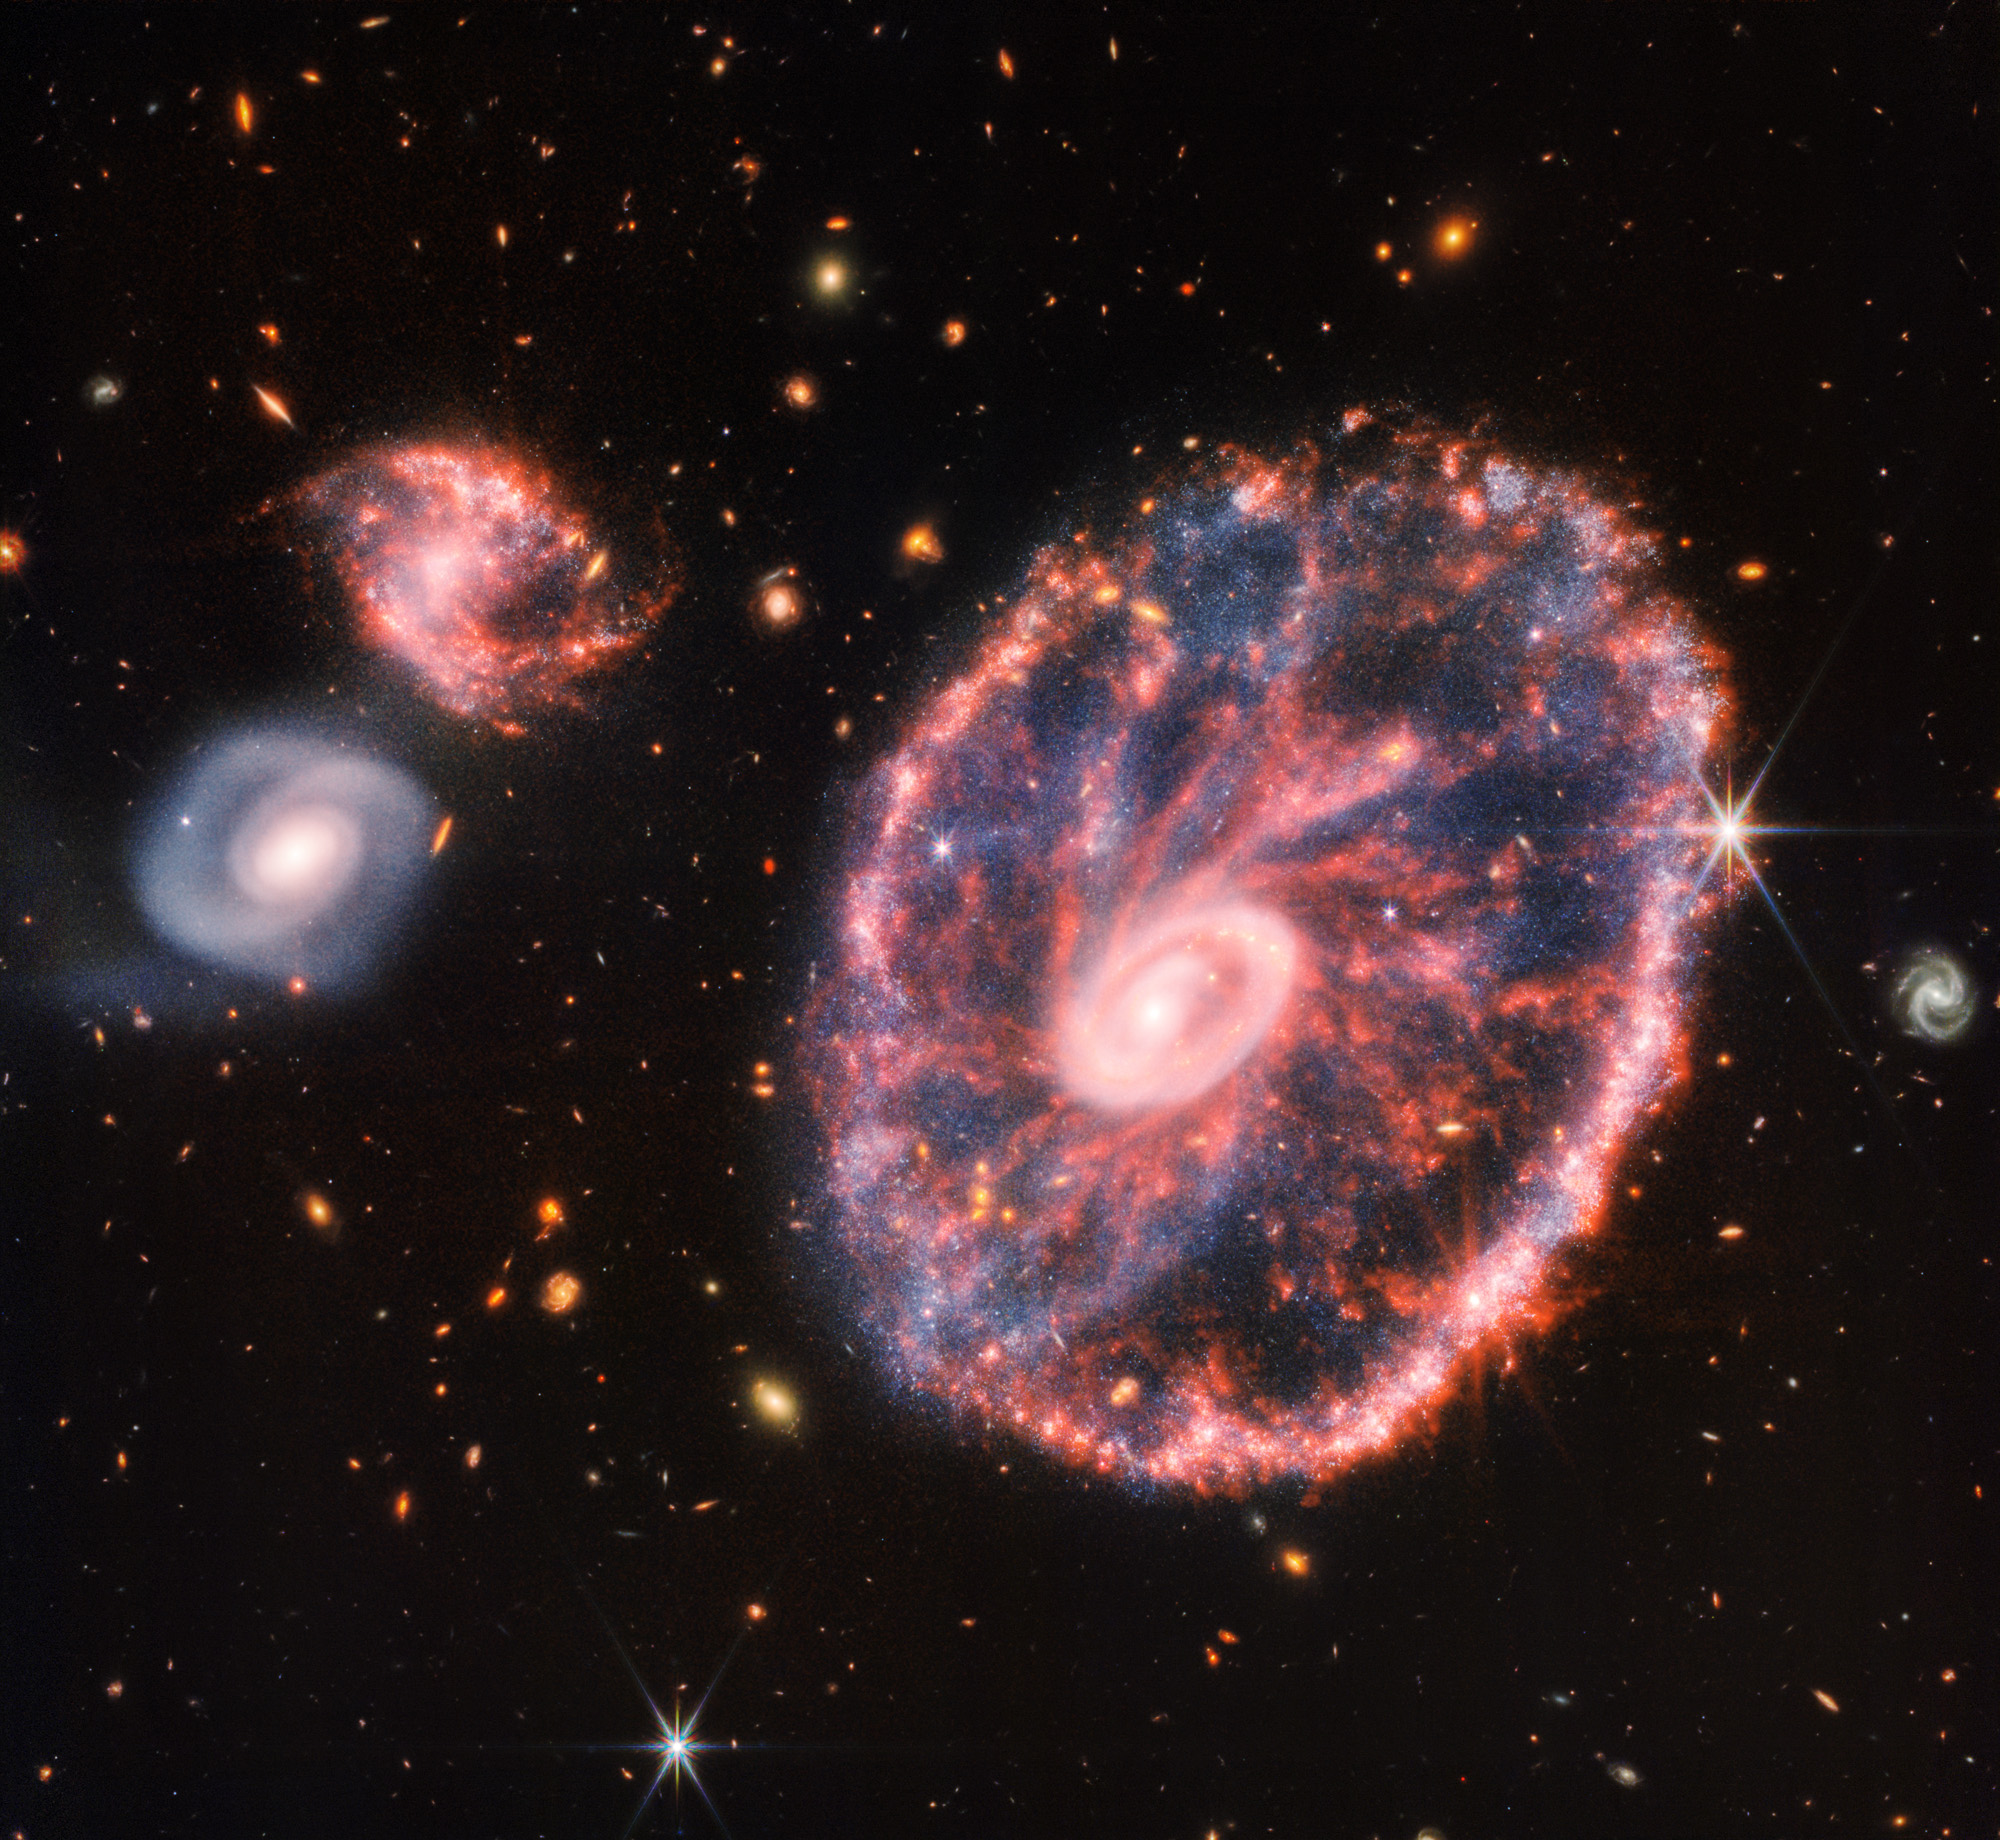 Cartwheel galaxy captured during James Webb observations